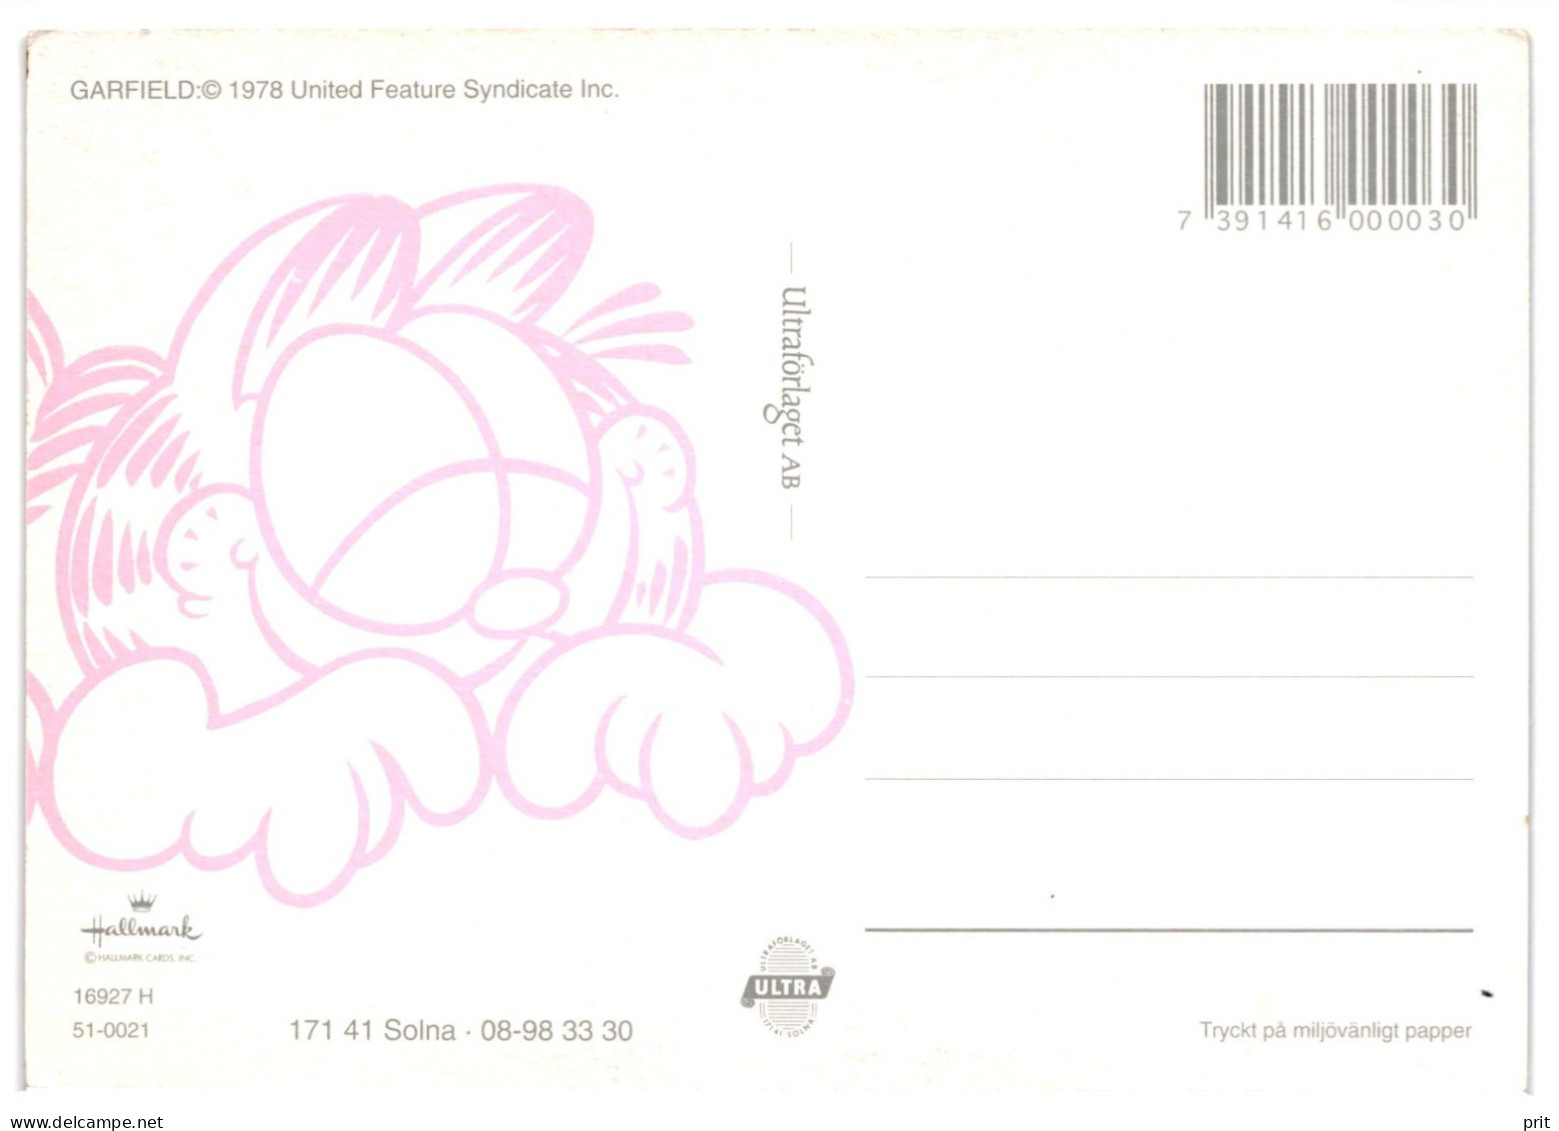 Garfield The Cat Unused Postcard By Jim Davis. "My Heart Belongs To You" Publisher Ultraförlaget AB Sweden - Fumetti